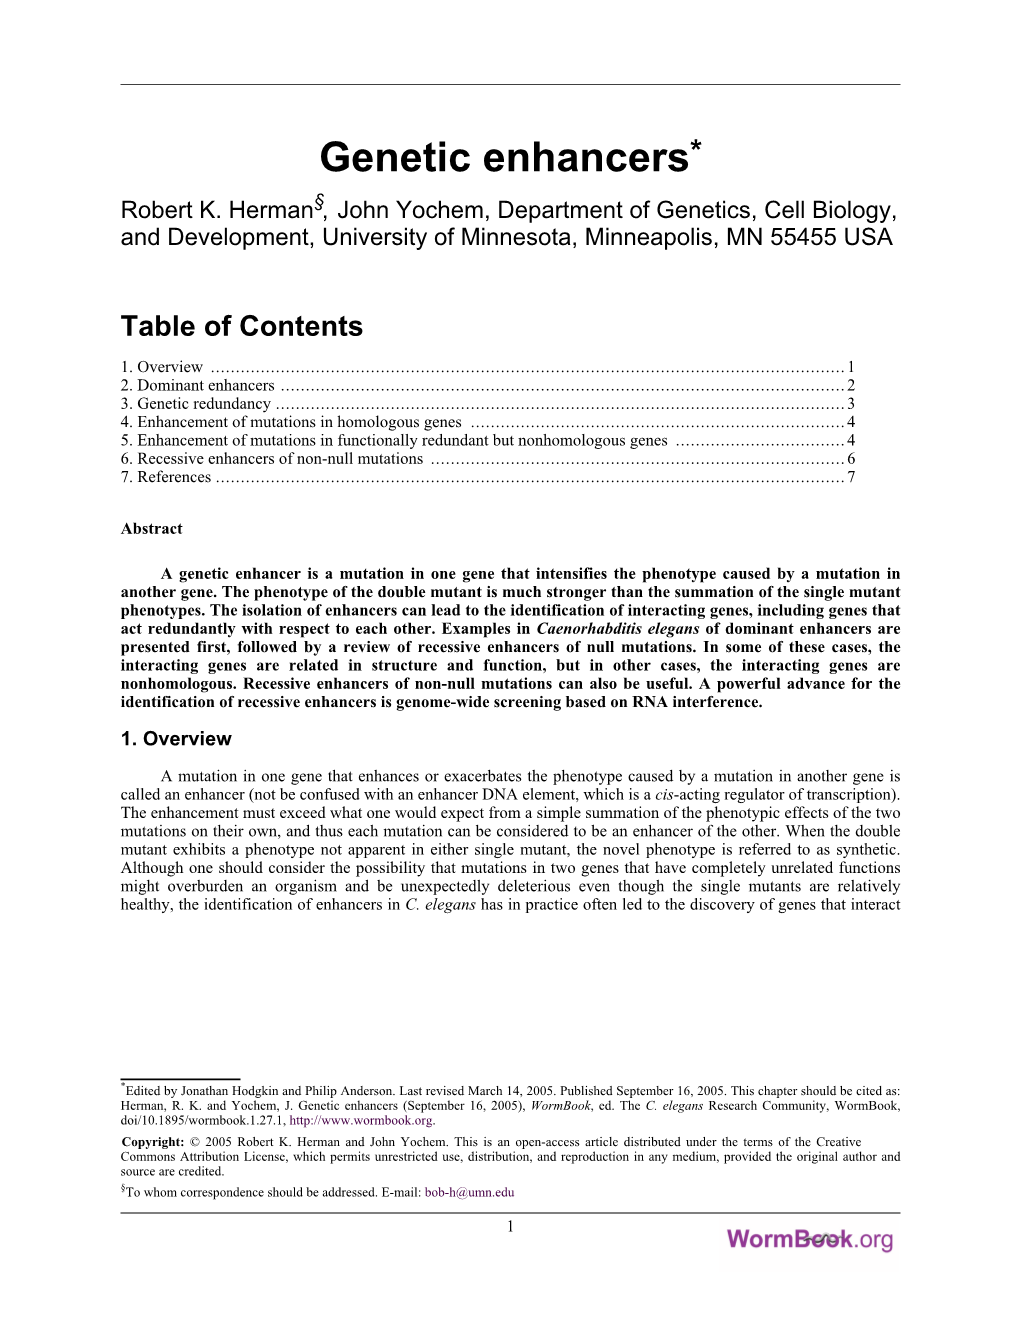 Genetic Enhancers* Robert K